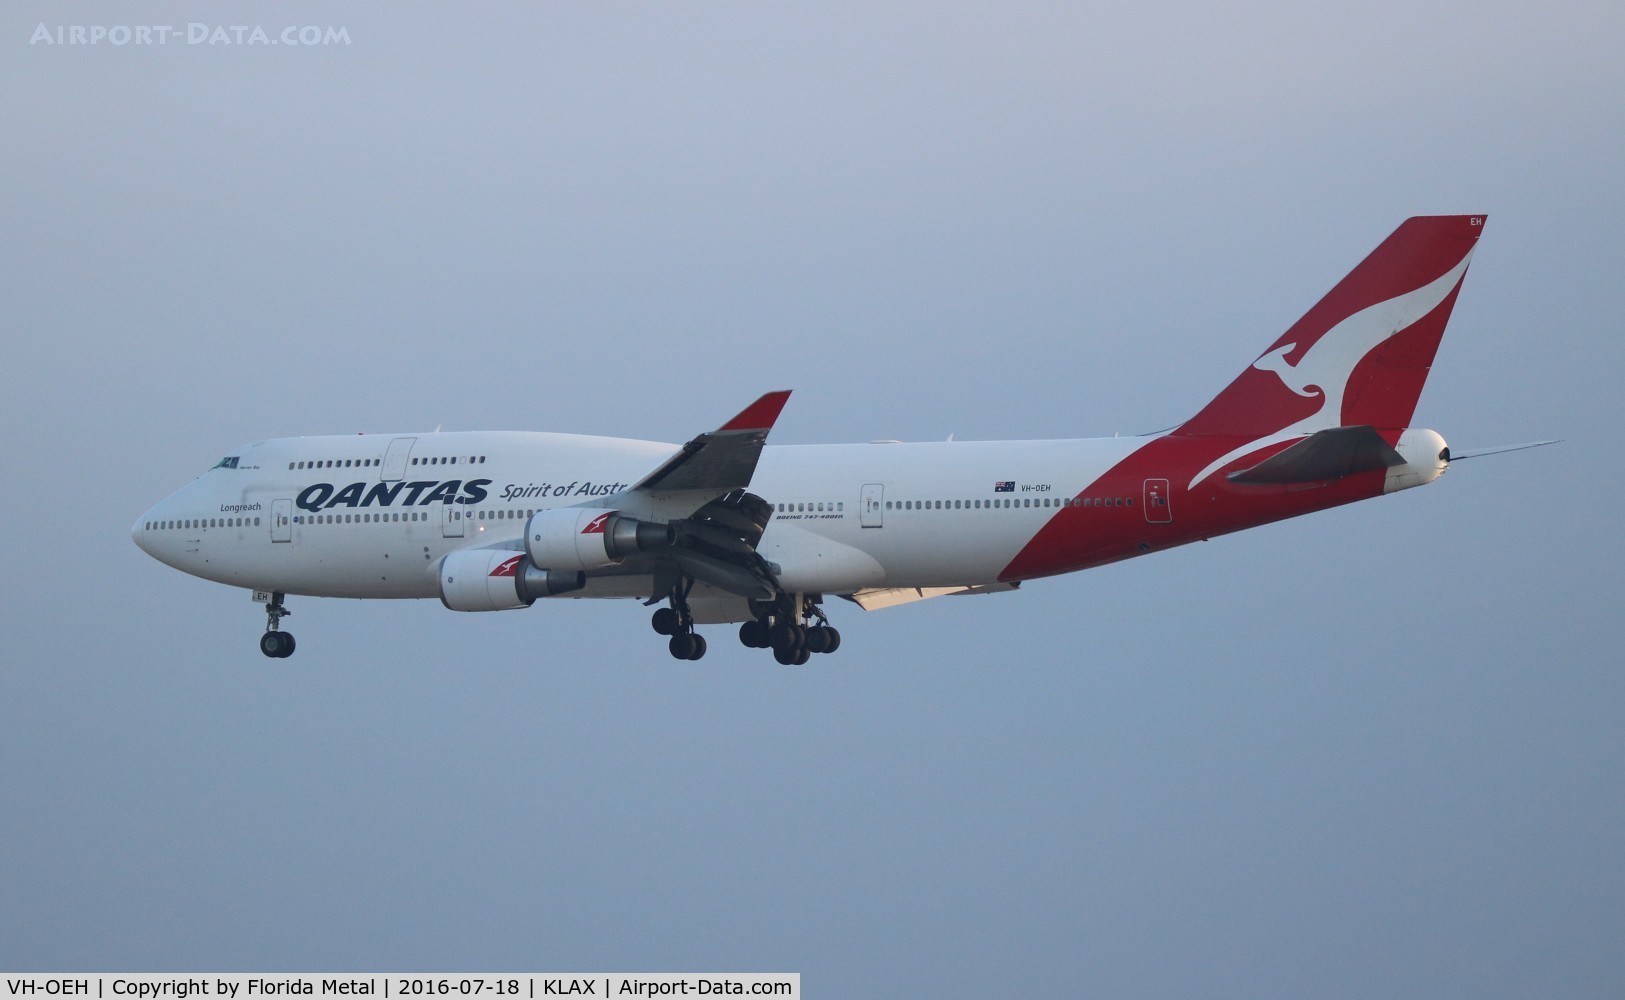 VH-OEH, 2003 Boeing 747-438/ER C/N 32912, Qantas 747-438